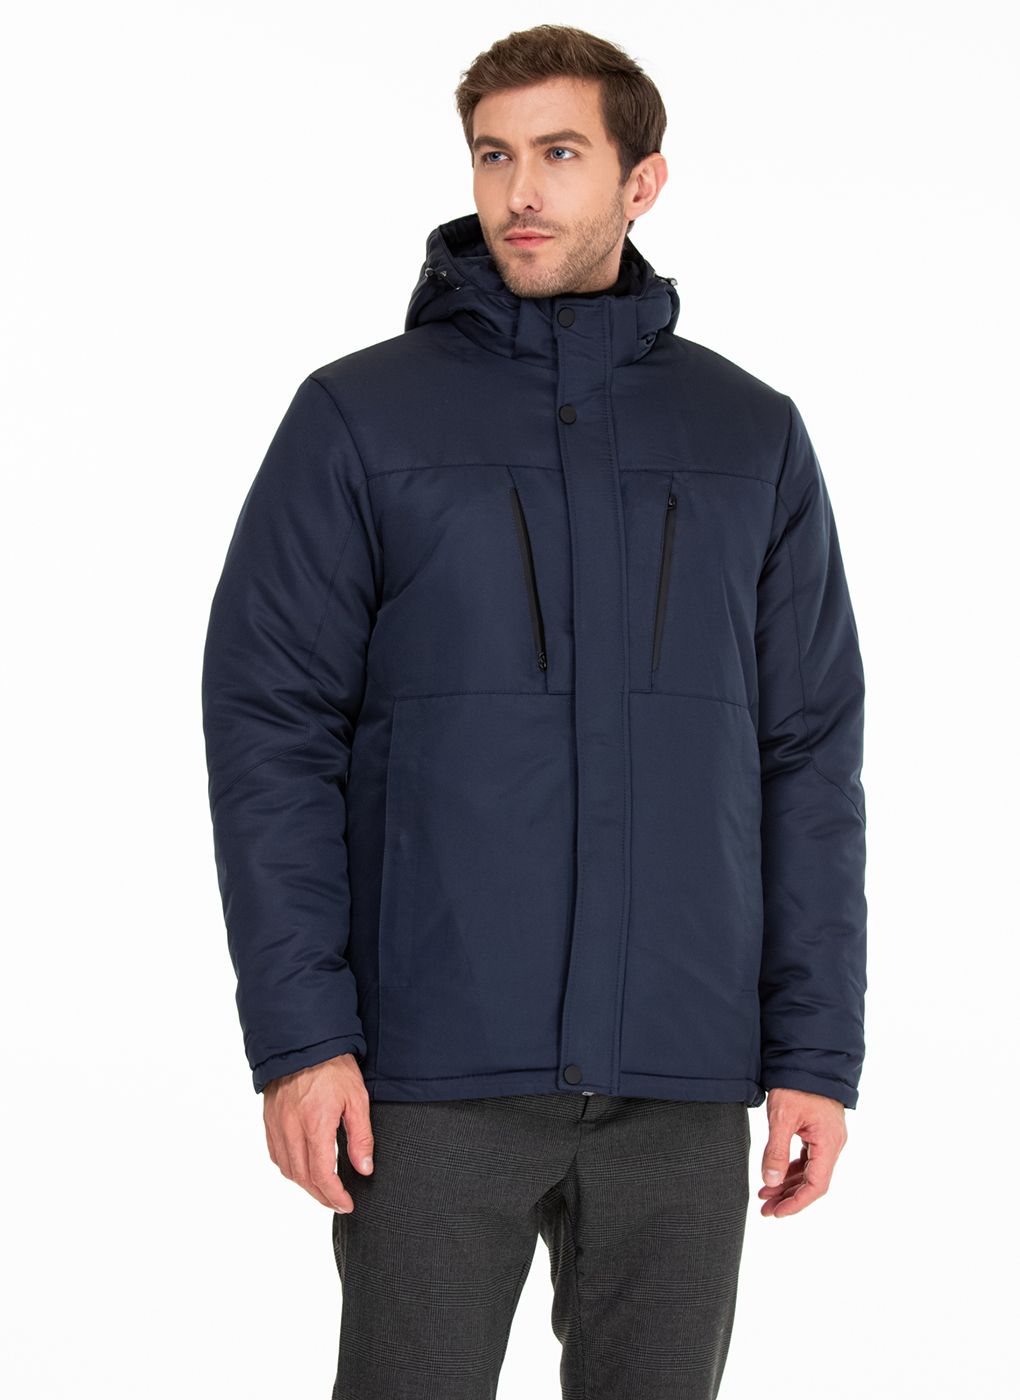 Зимняя куртка мужская Amimoda 57767 синяя 54 RU